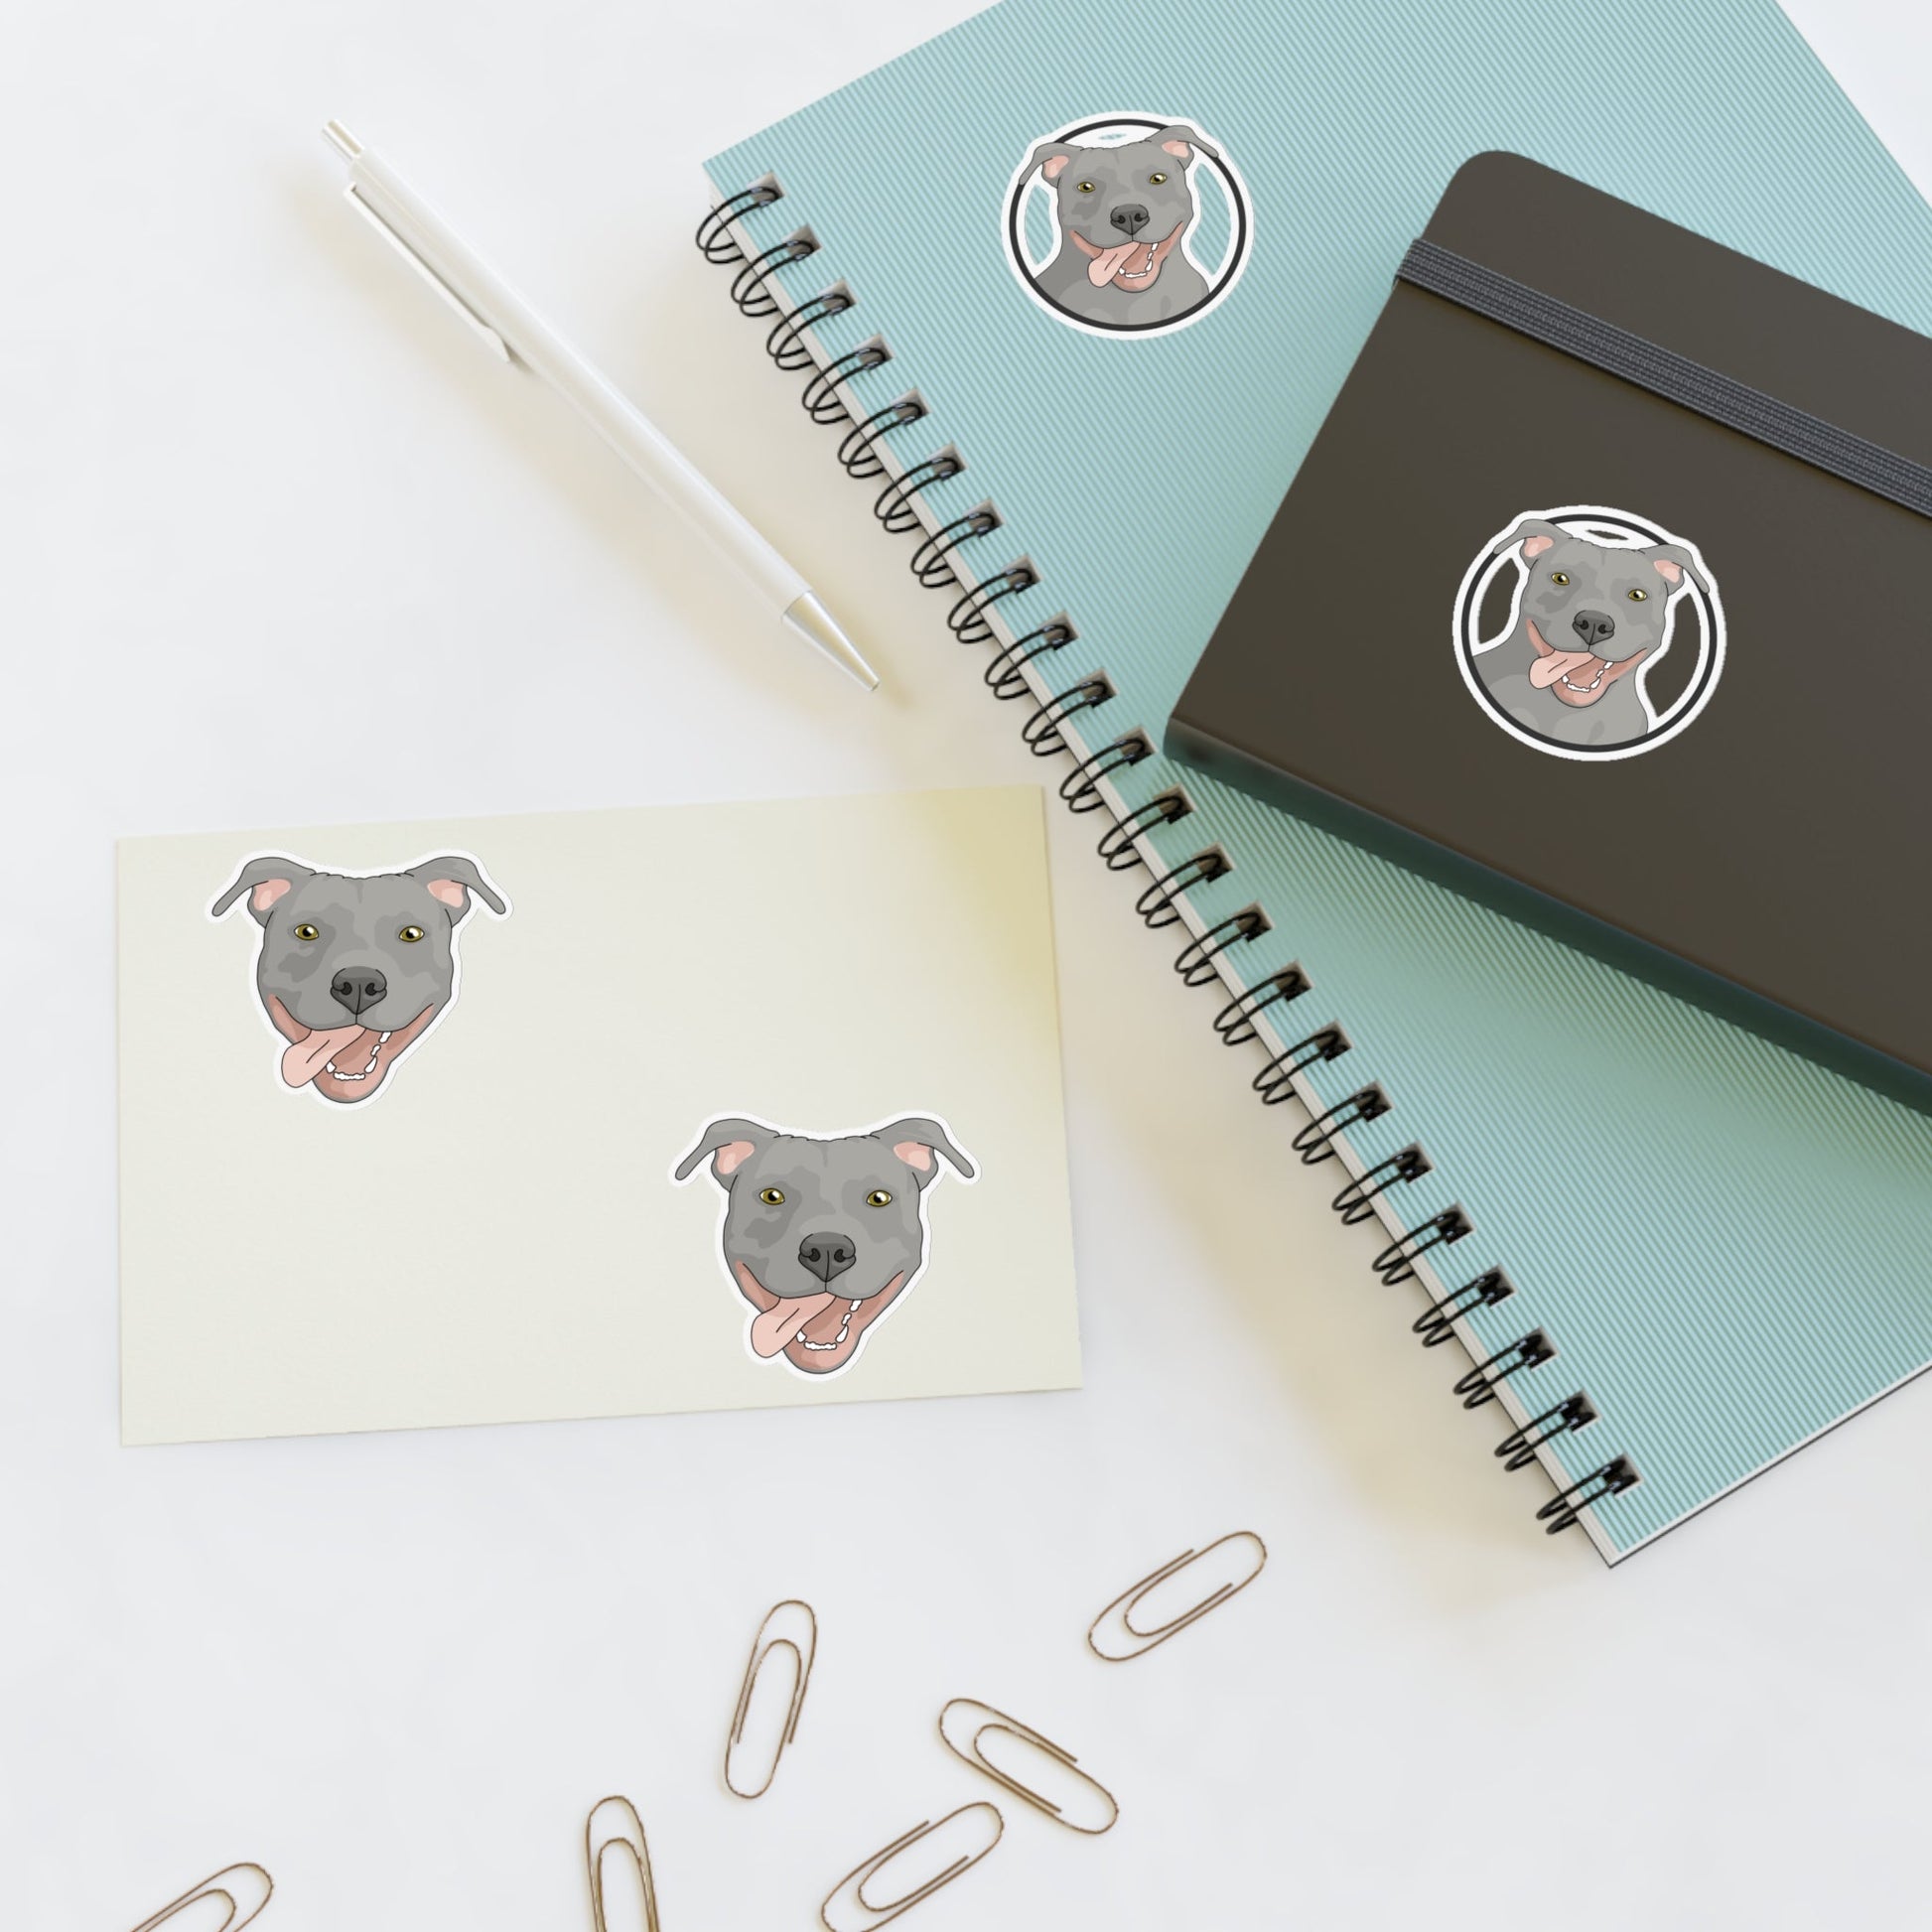 American Pit Bull Terrier Circle | Sticker Sheet - Detezi Designs-38529905213935046724